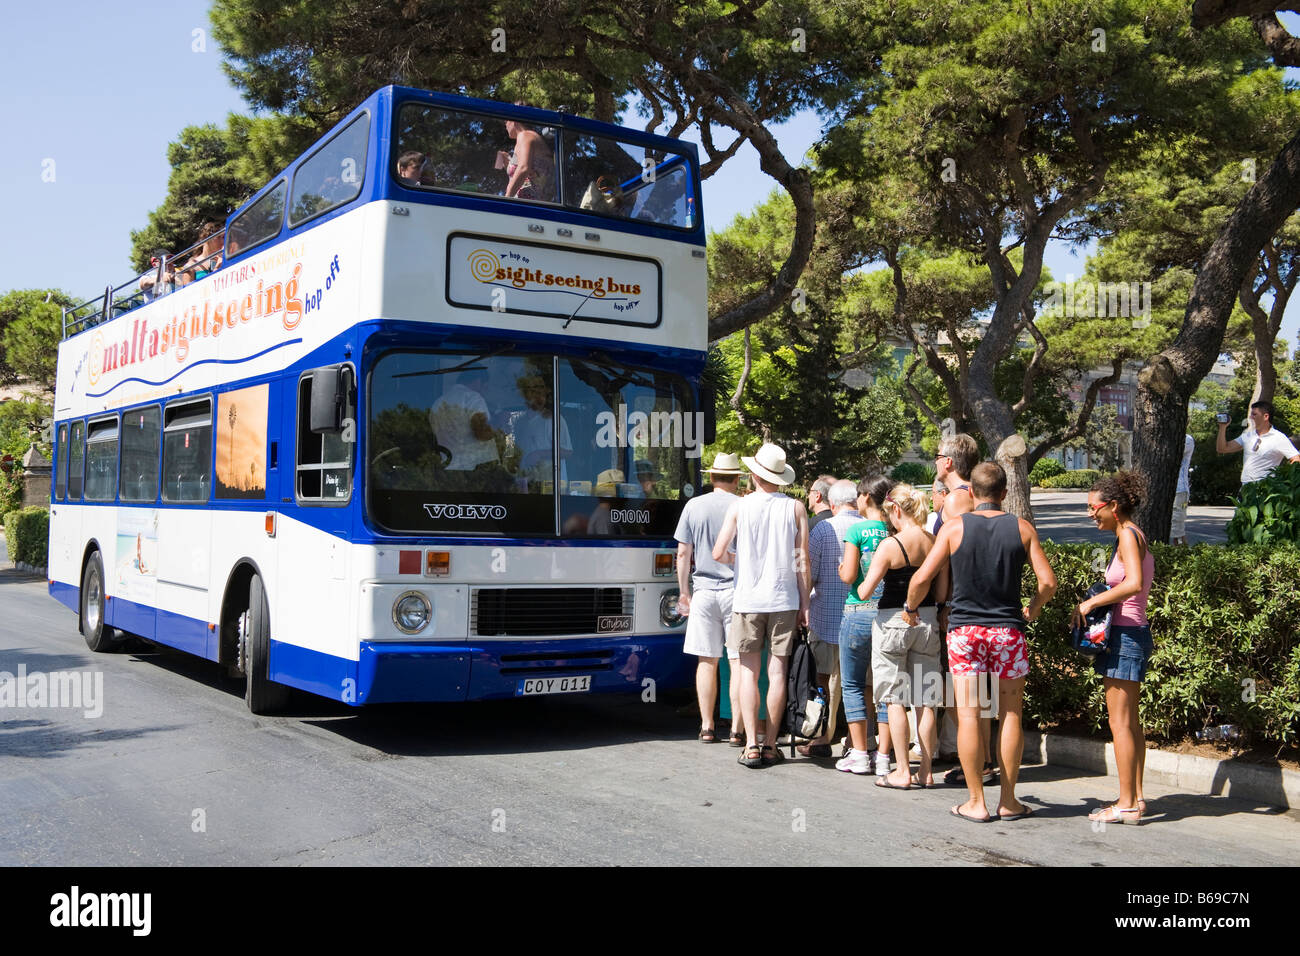 Tourists queuing to board a Malta sightseeing tour bus, Mdina, Malta Stock Photo